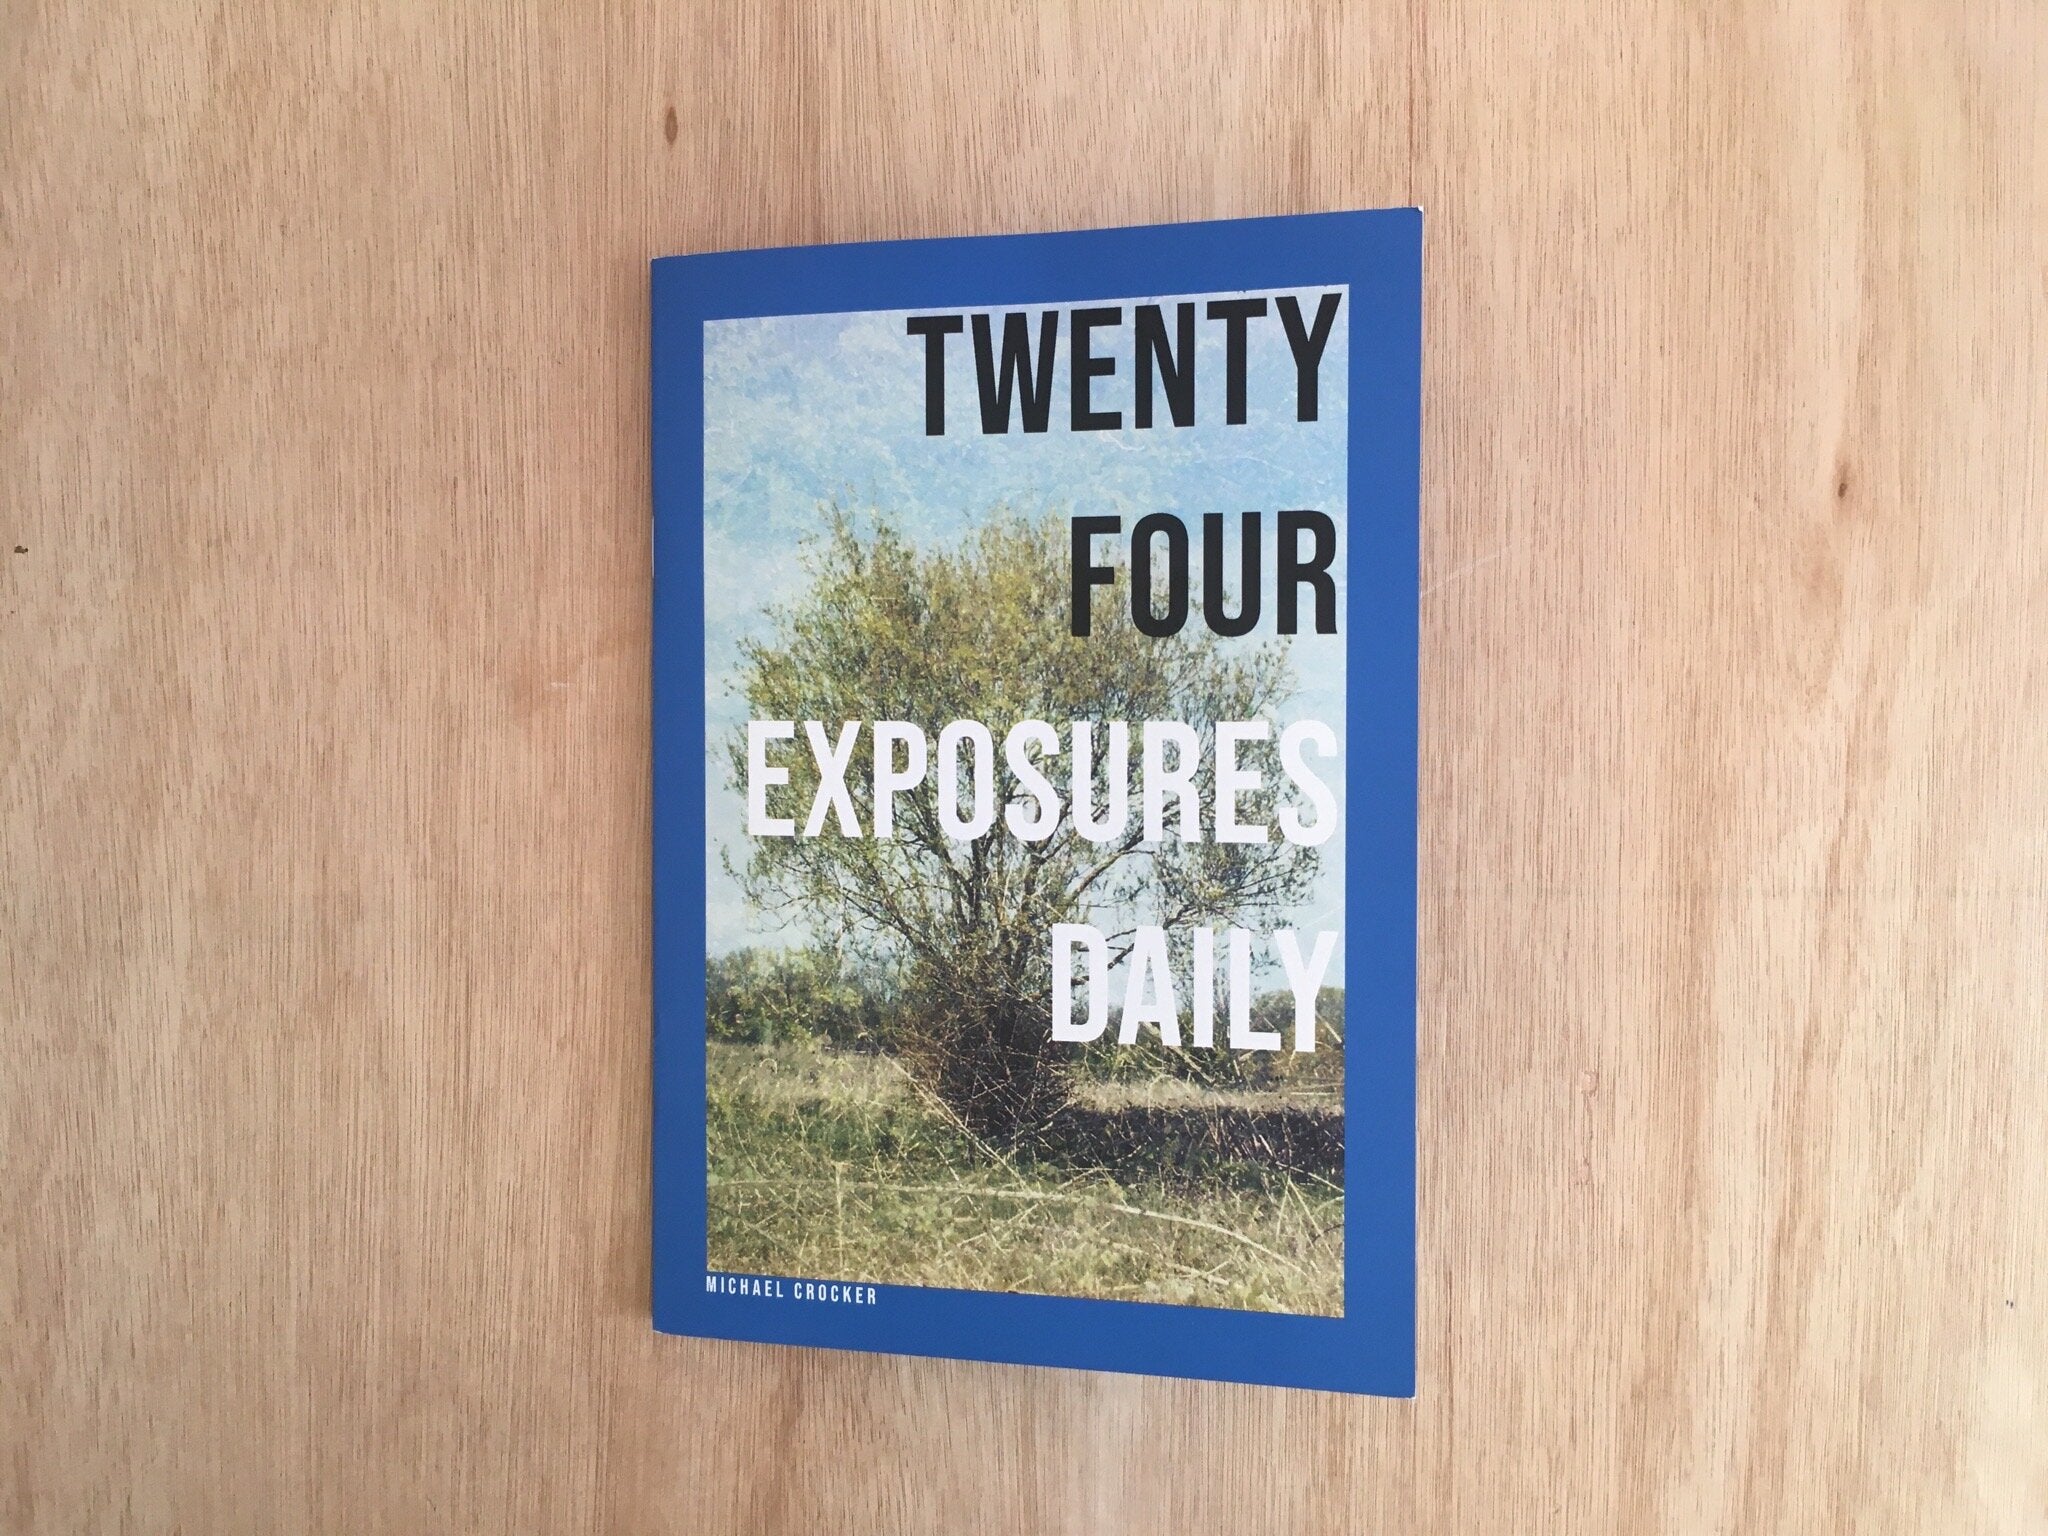 TWENTY FOUR EXPOSURES DAILY by Michael Crocker